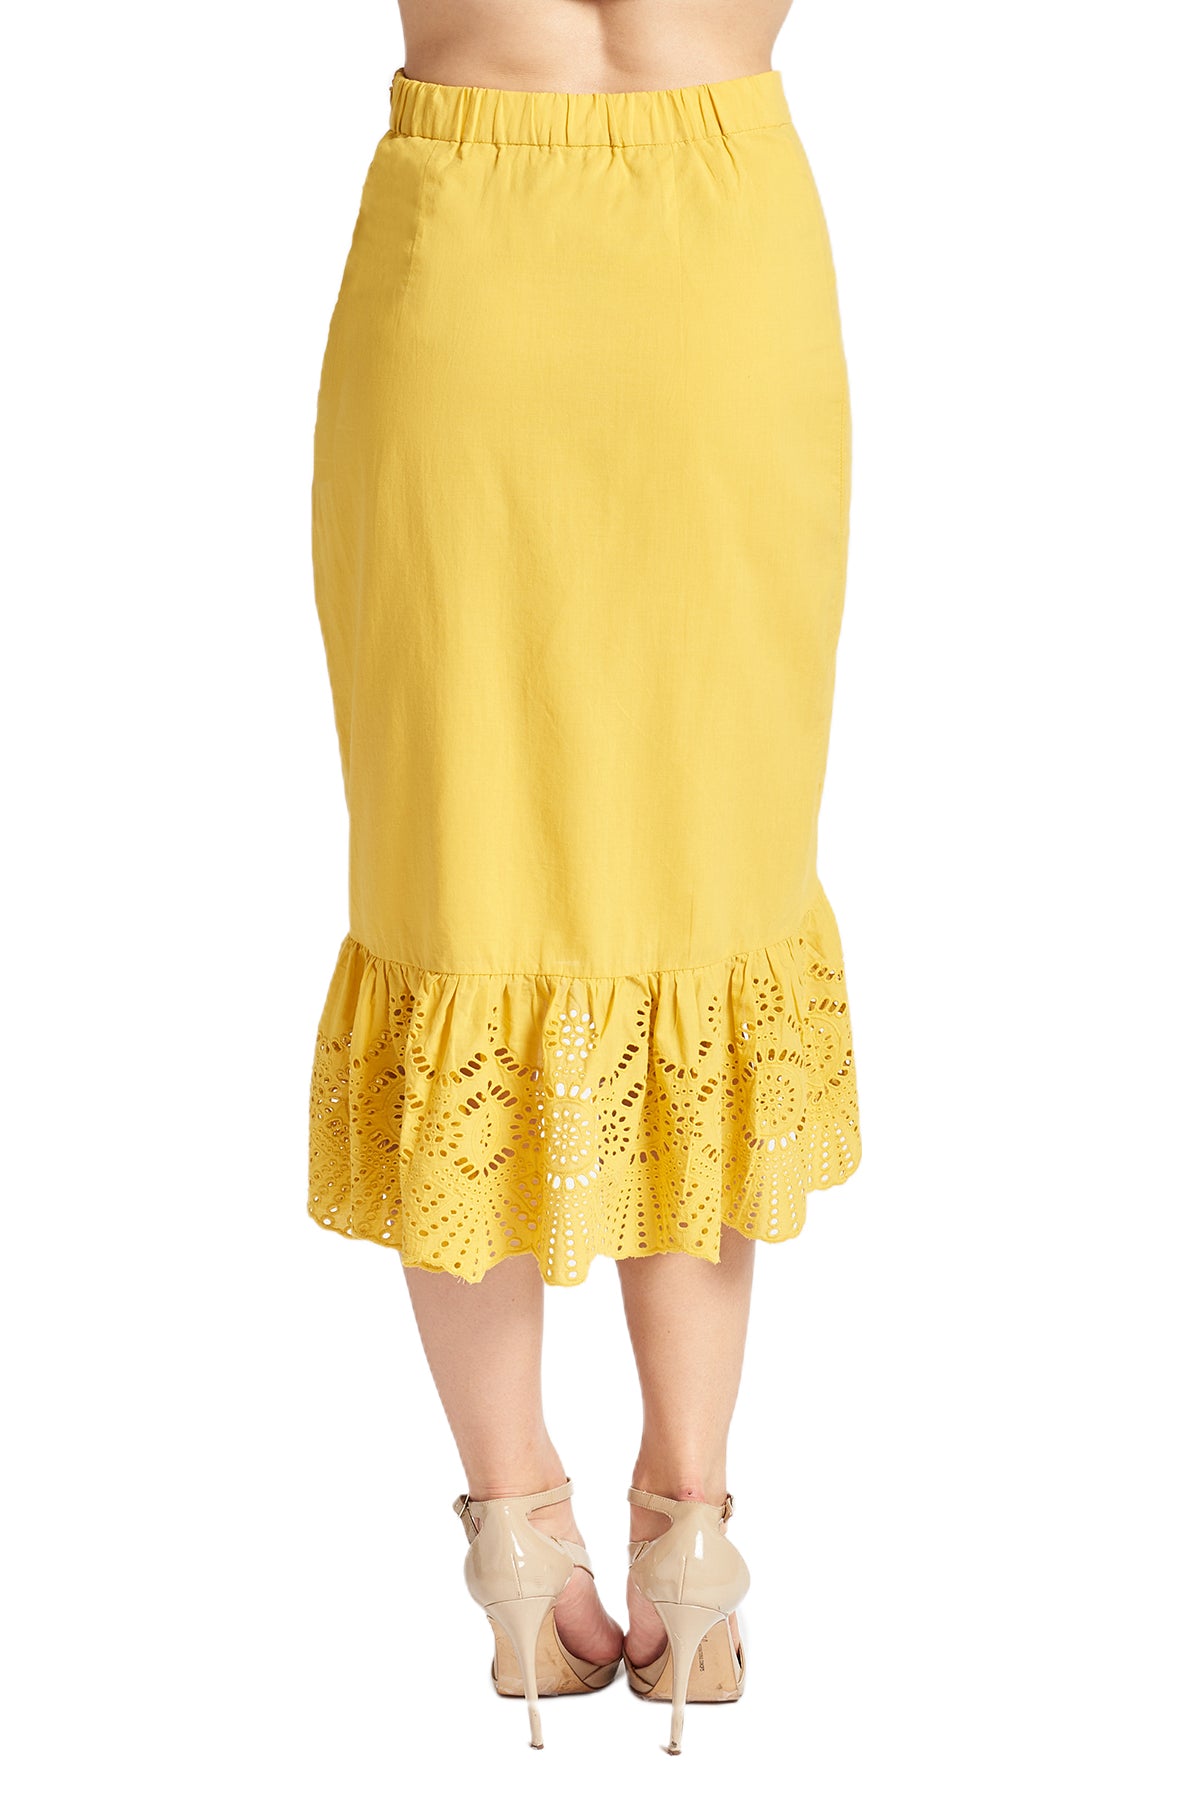 Back view of model wearing yellow cotton eyelet ruffle hem skirt.